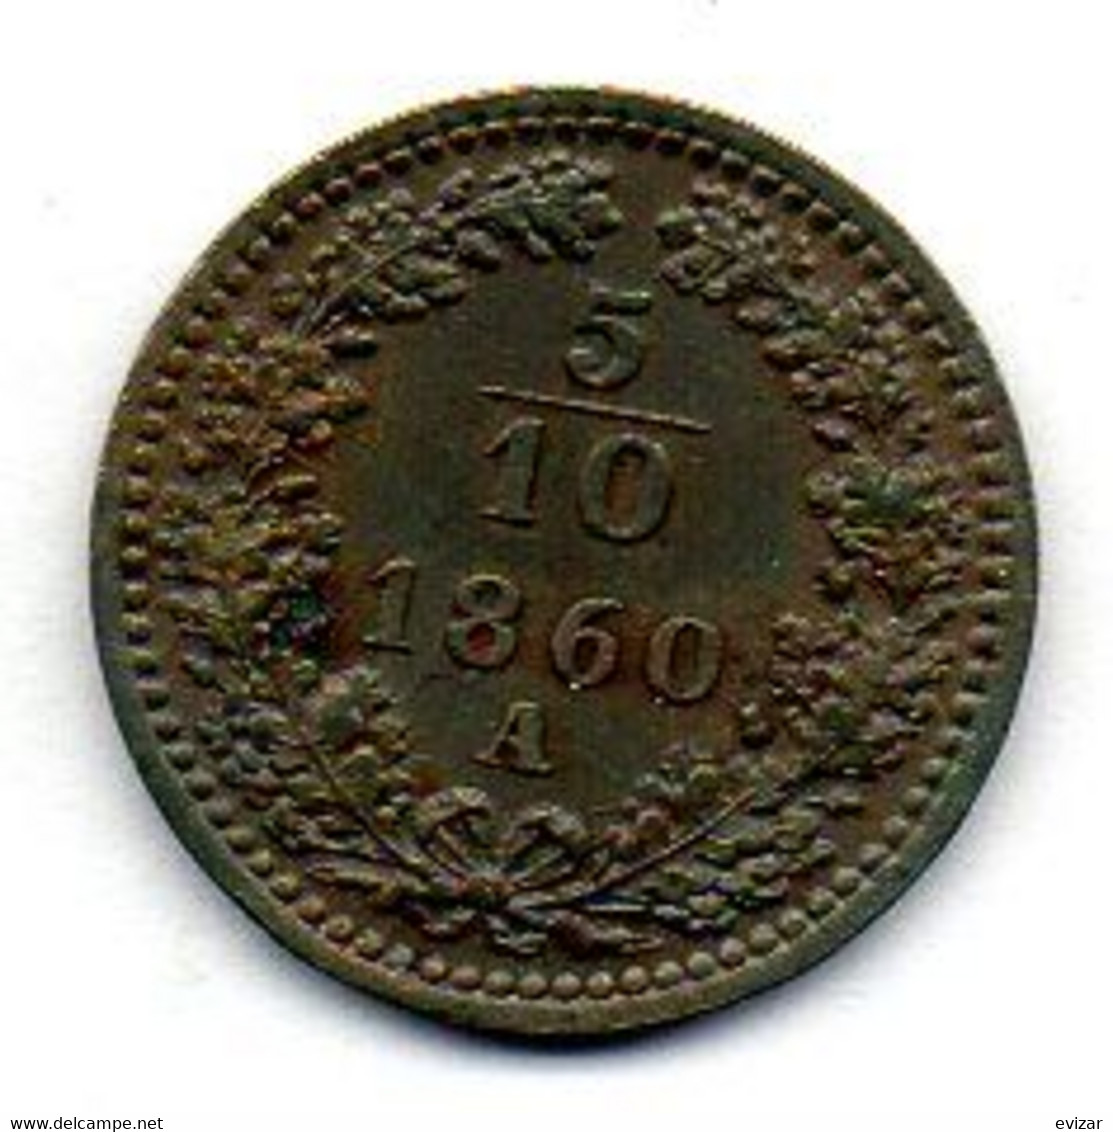 AUSTRIA, 5/10 Kreuzer, Copper, Year 1860-A, KM #2182 - Austria